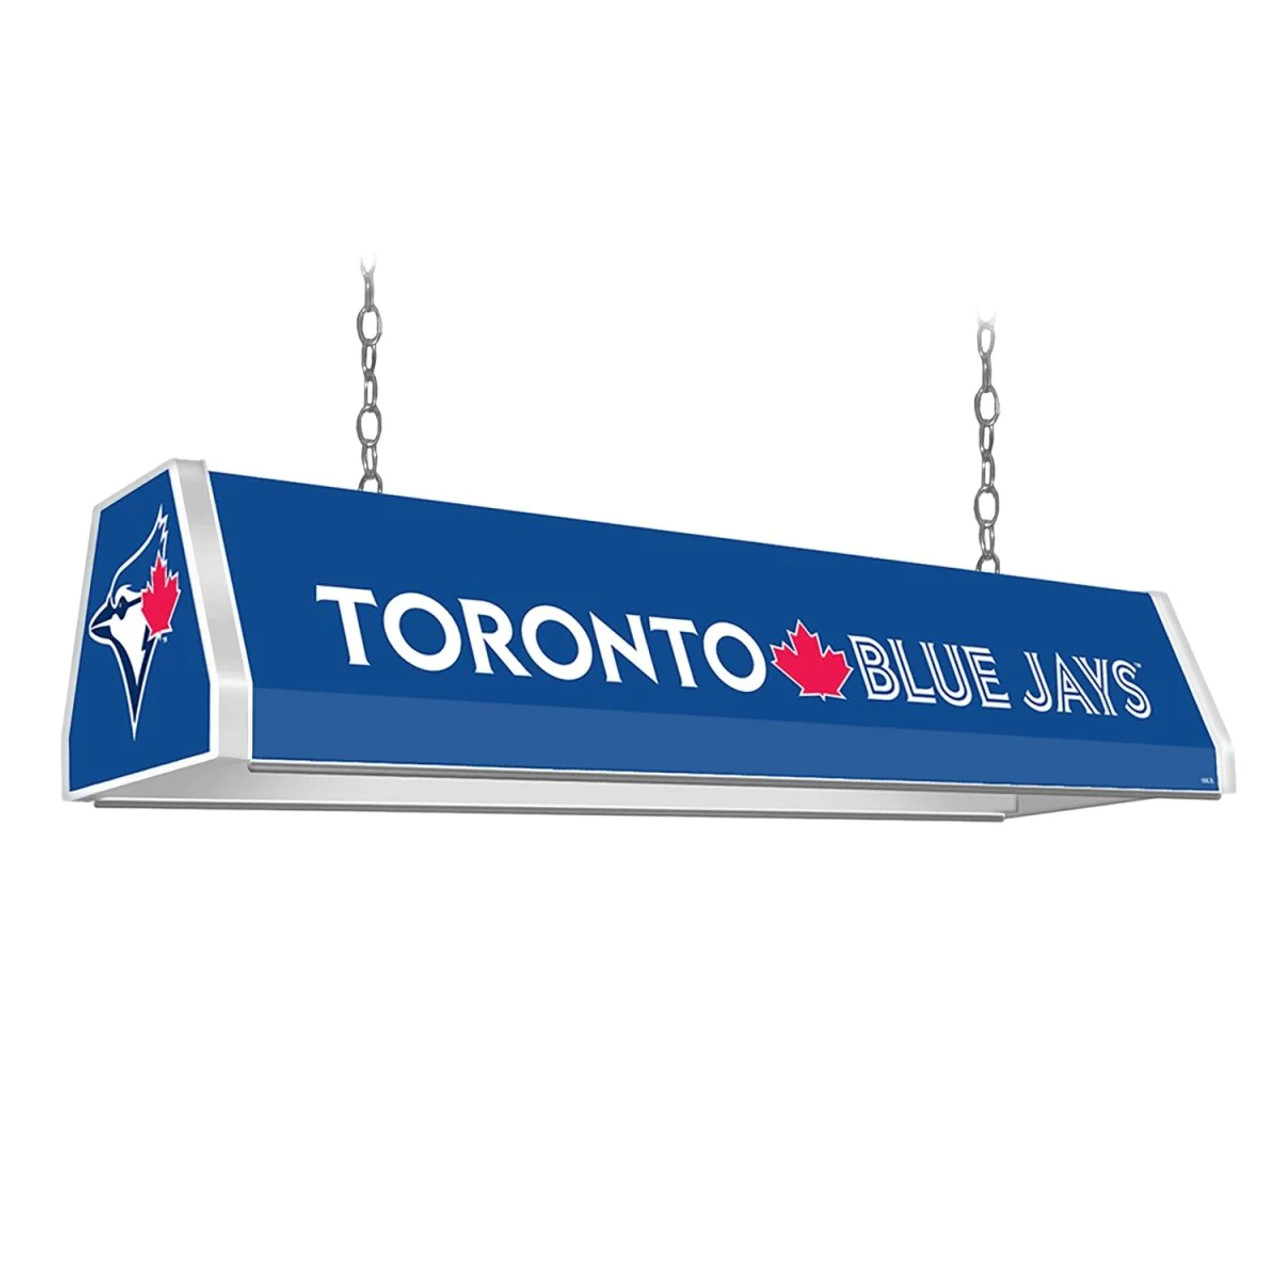 MBBLUE JAYS-310-01A, TOR, Toronto Blue, Jays,  Standard, Billiard, Pool, Table, Light, Lamp, "A" Version, MLB, The Fan-Brand, 704384966609